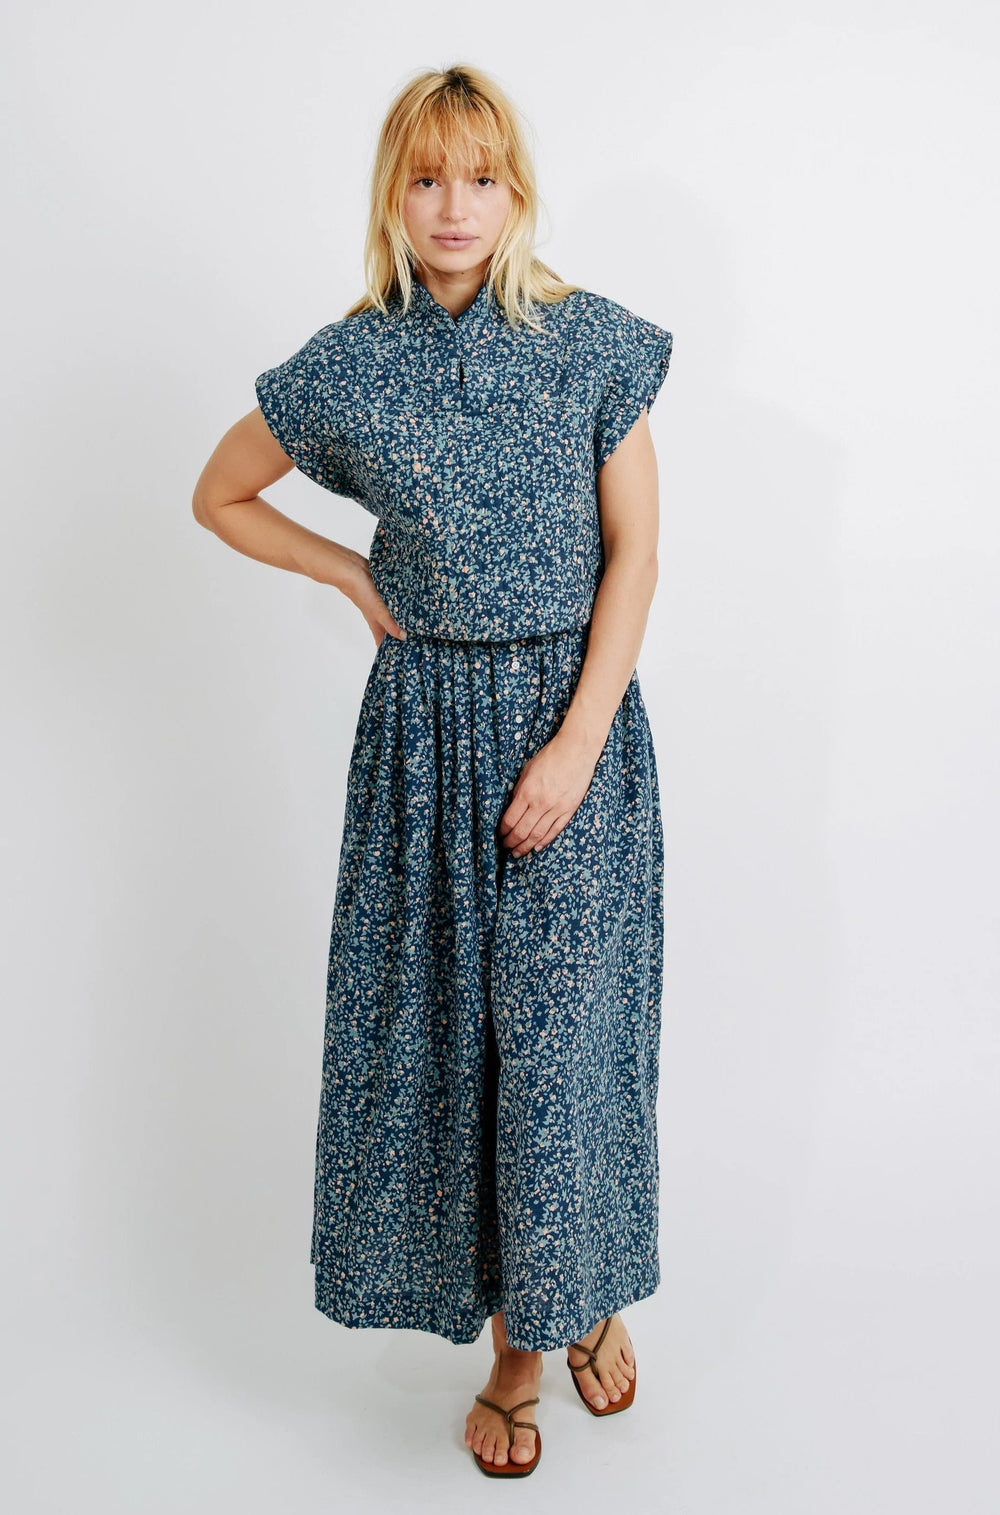 Mirth Apparel MIRTH Clothing | Bergamo Skirt in Blue Thistle